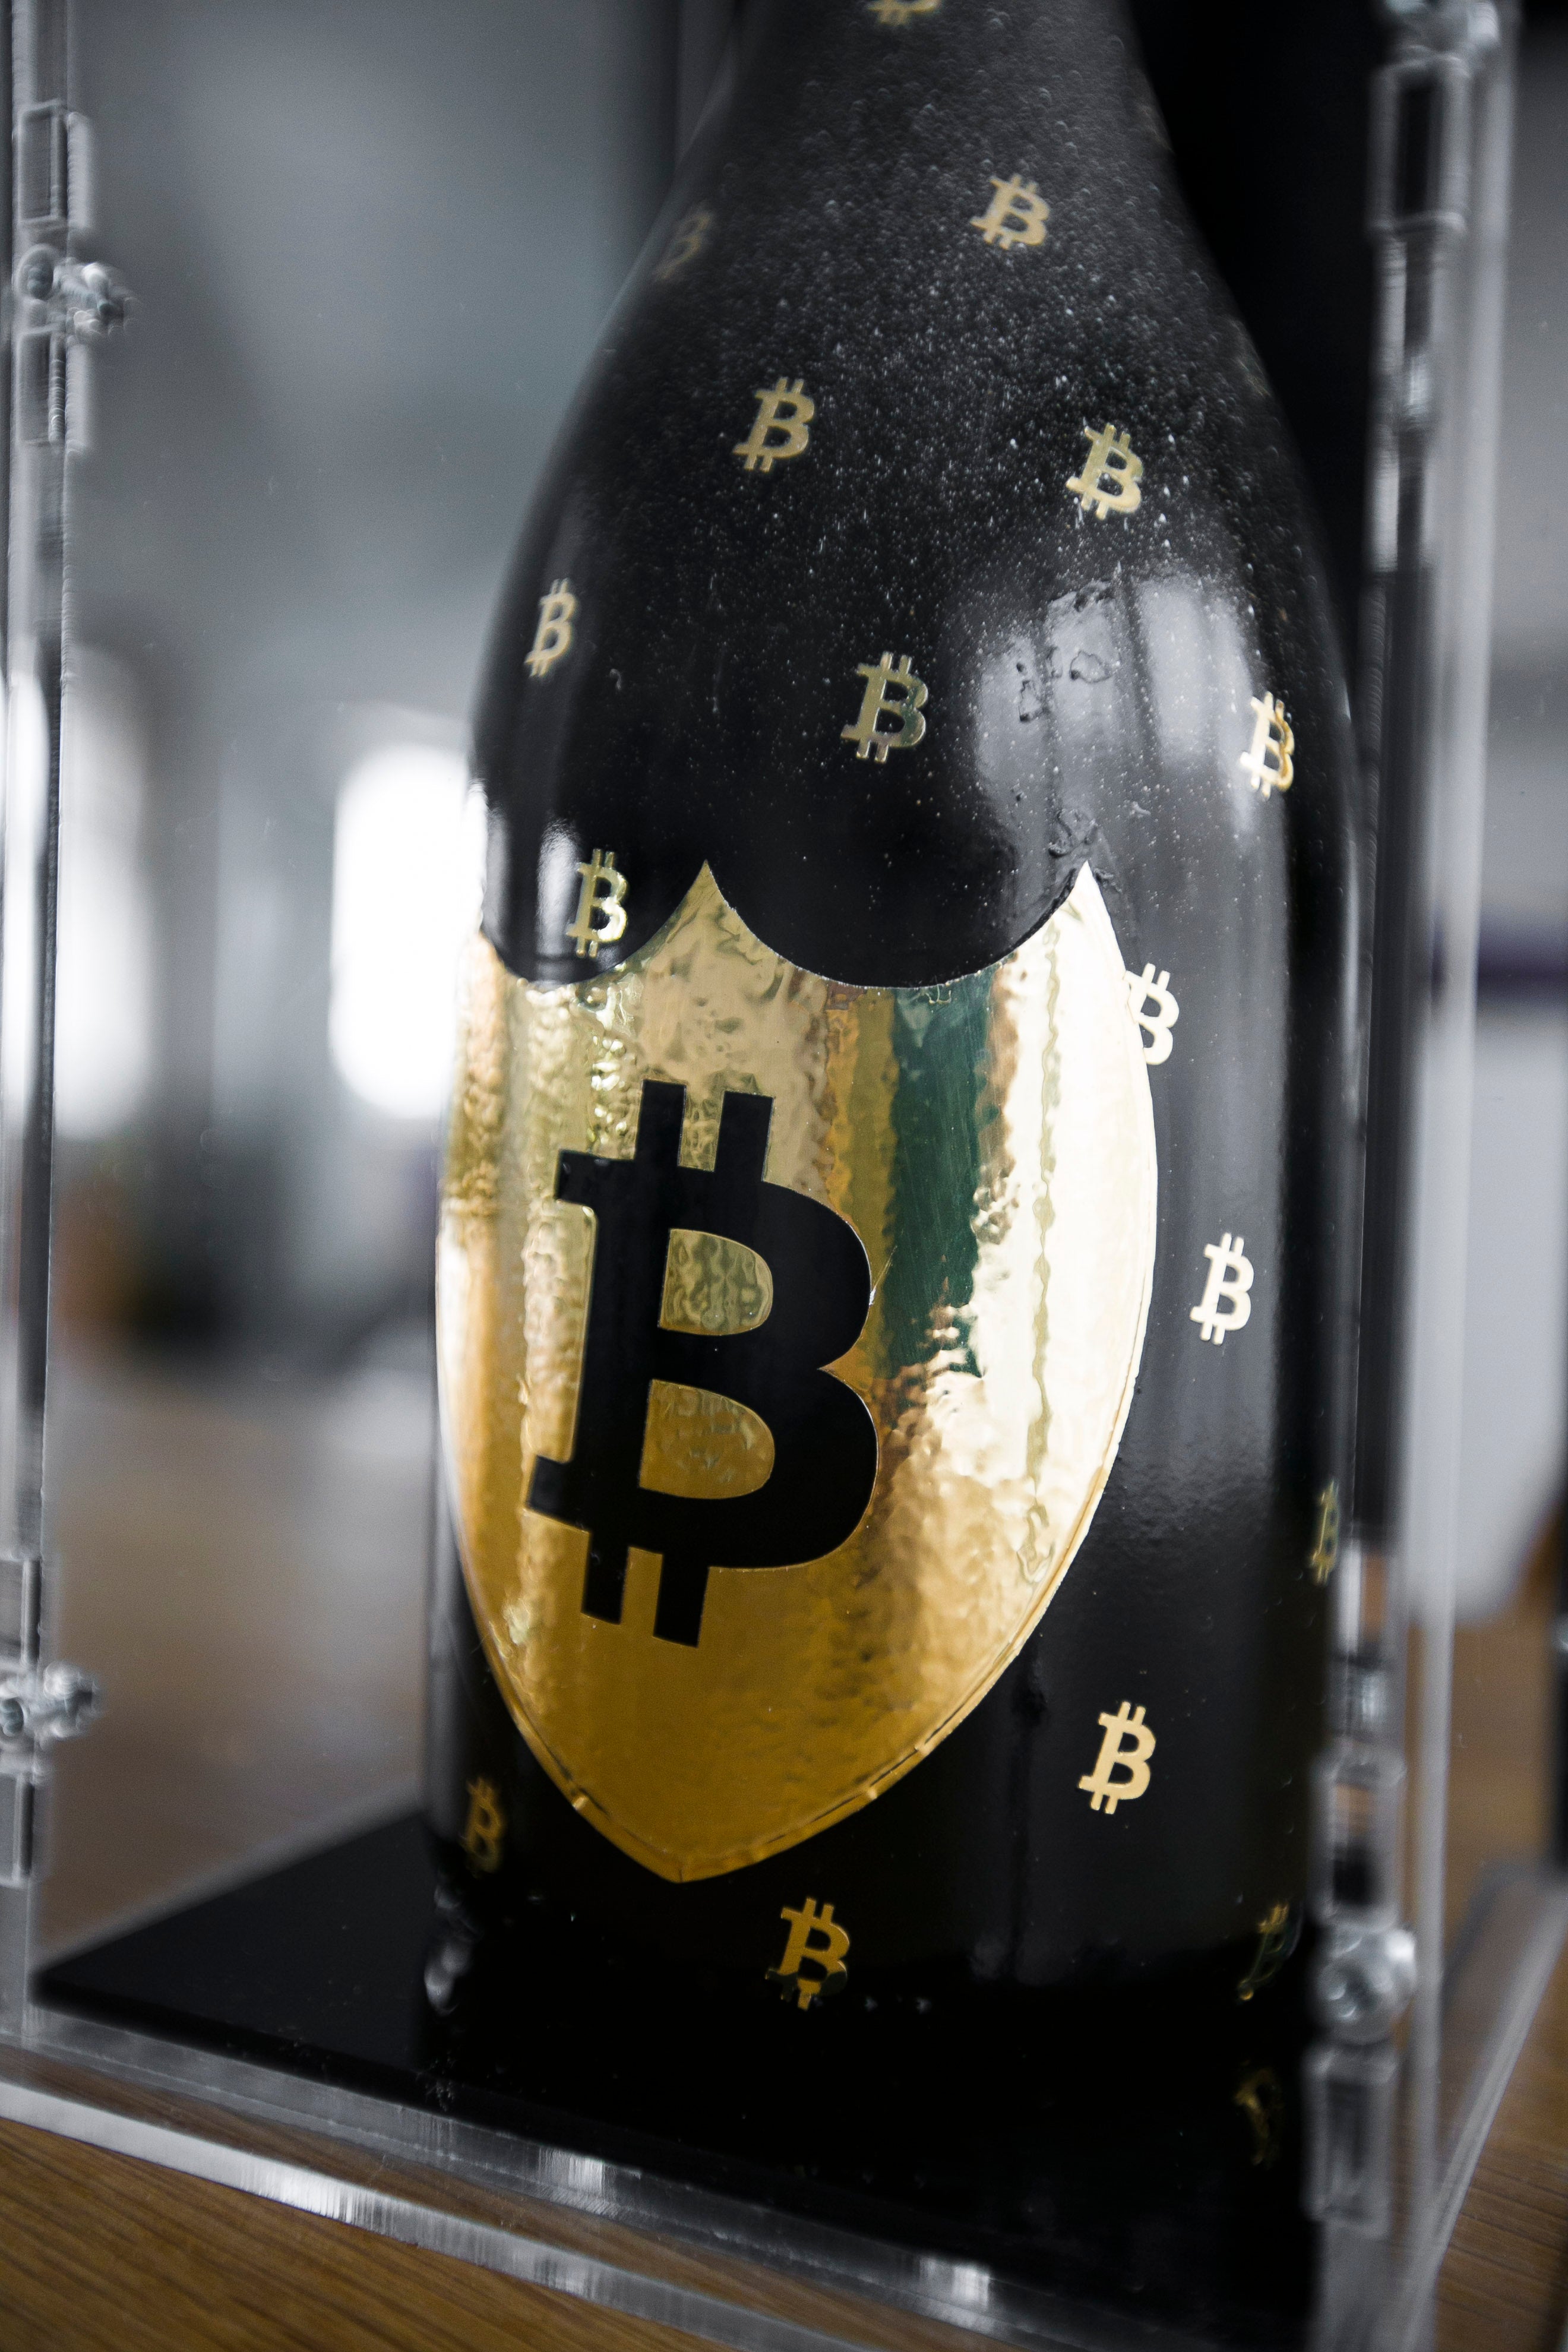 Bitcoin Bottle “Mass Adoption”